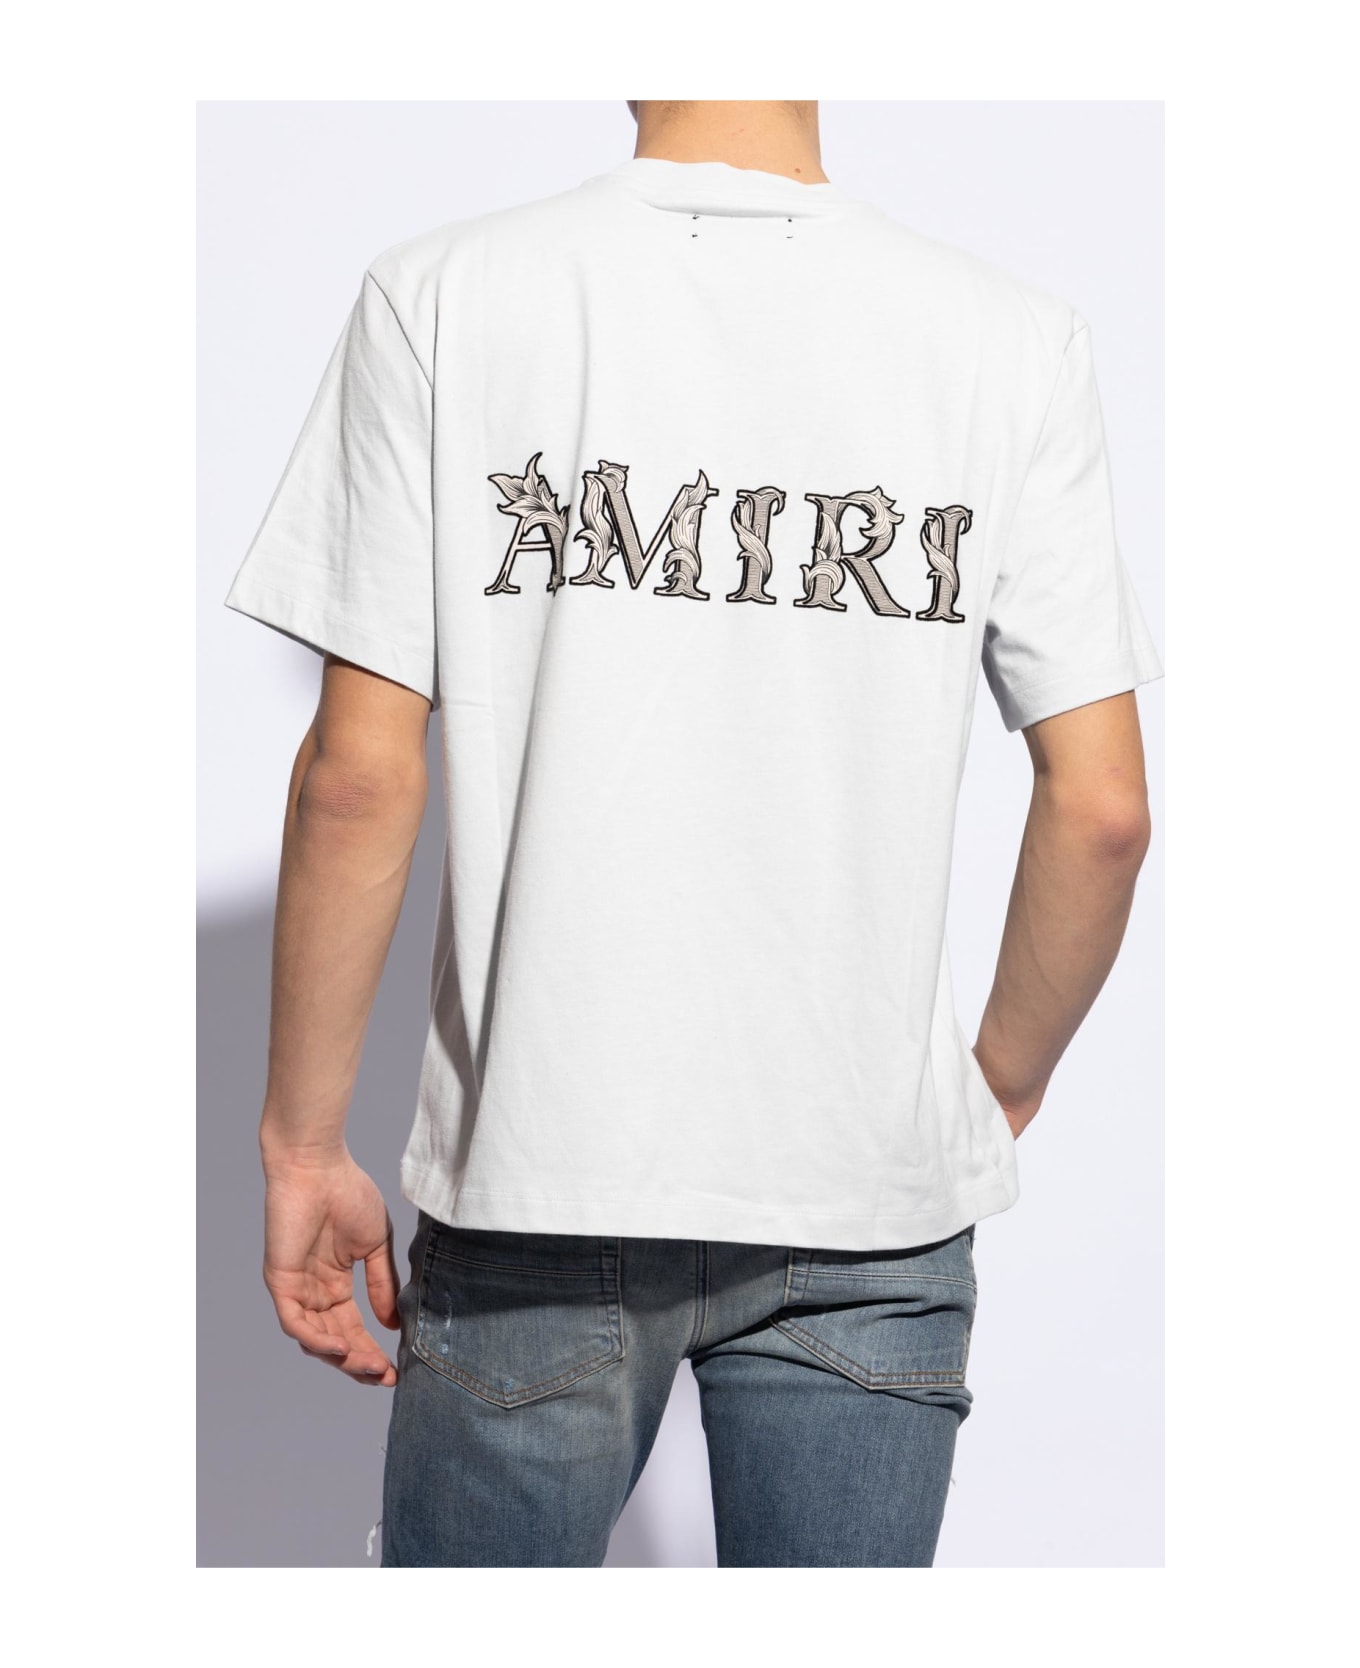 AMIRI T-shirt With Logo - Dust